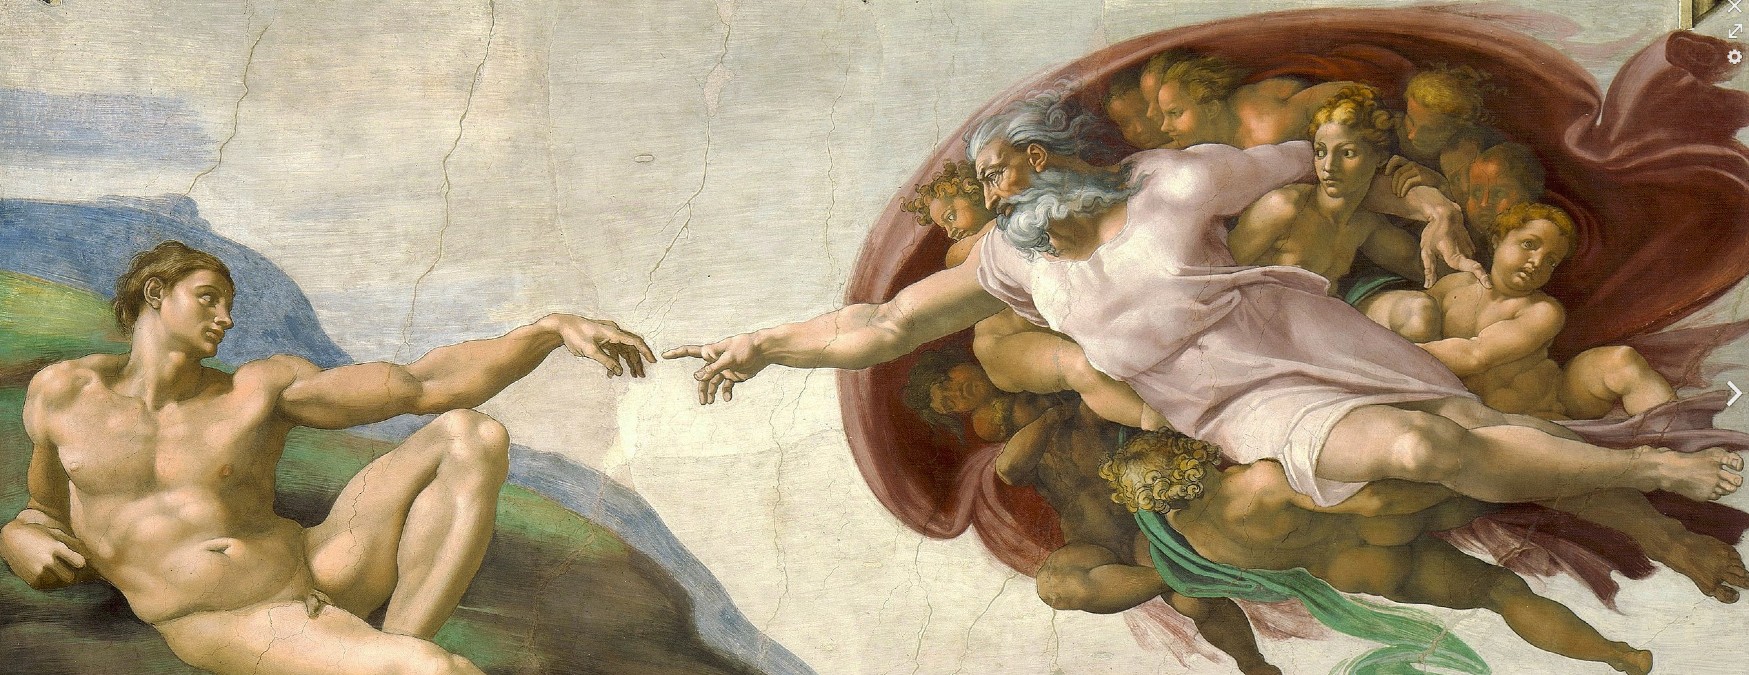 Michelangelo's Creation of Adam I